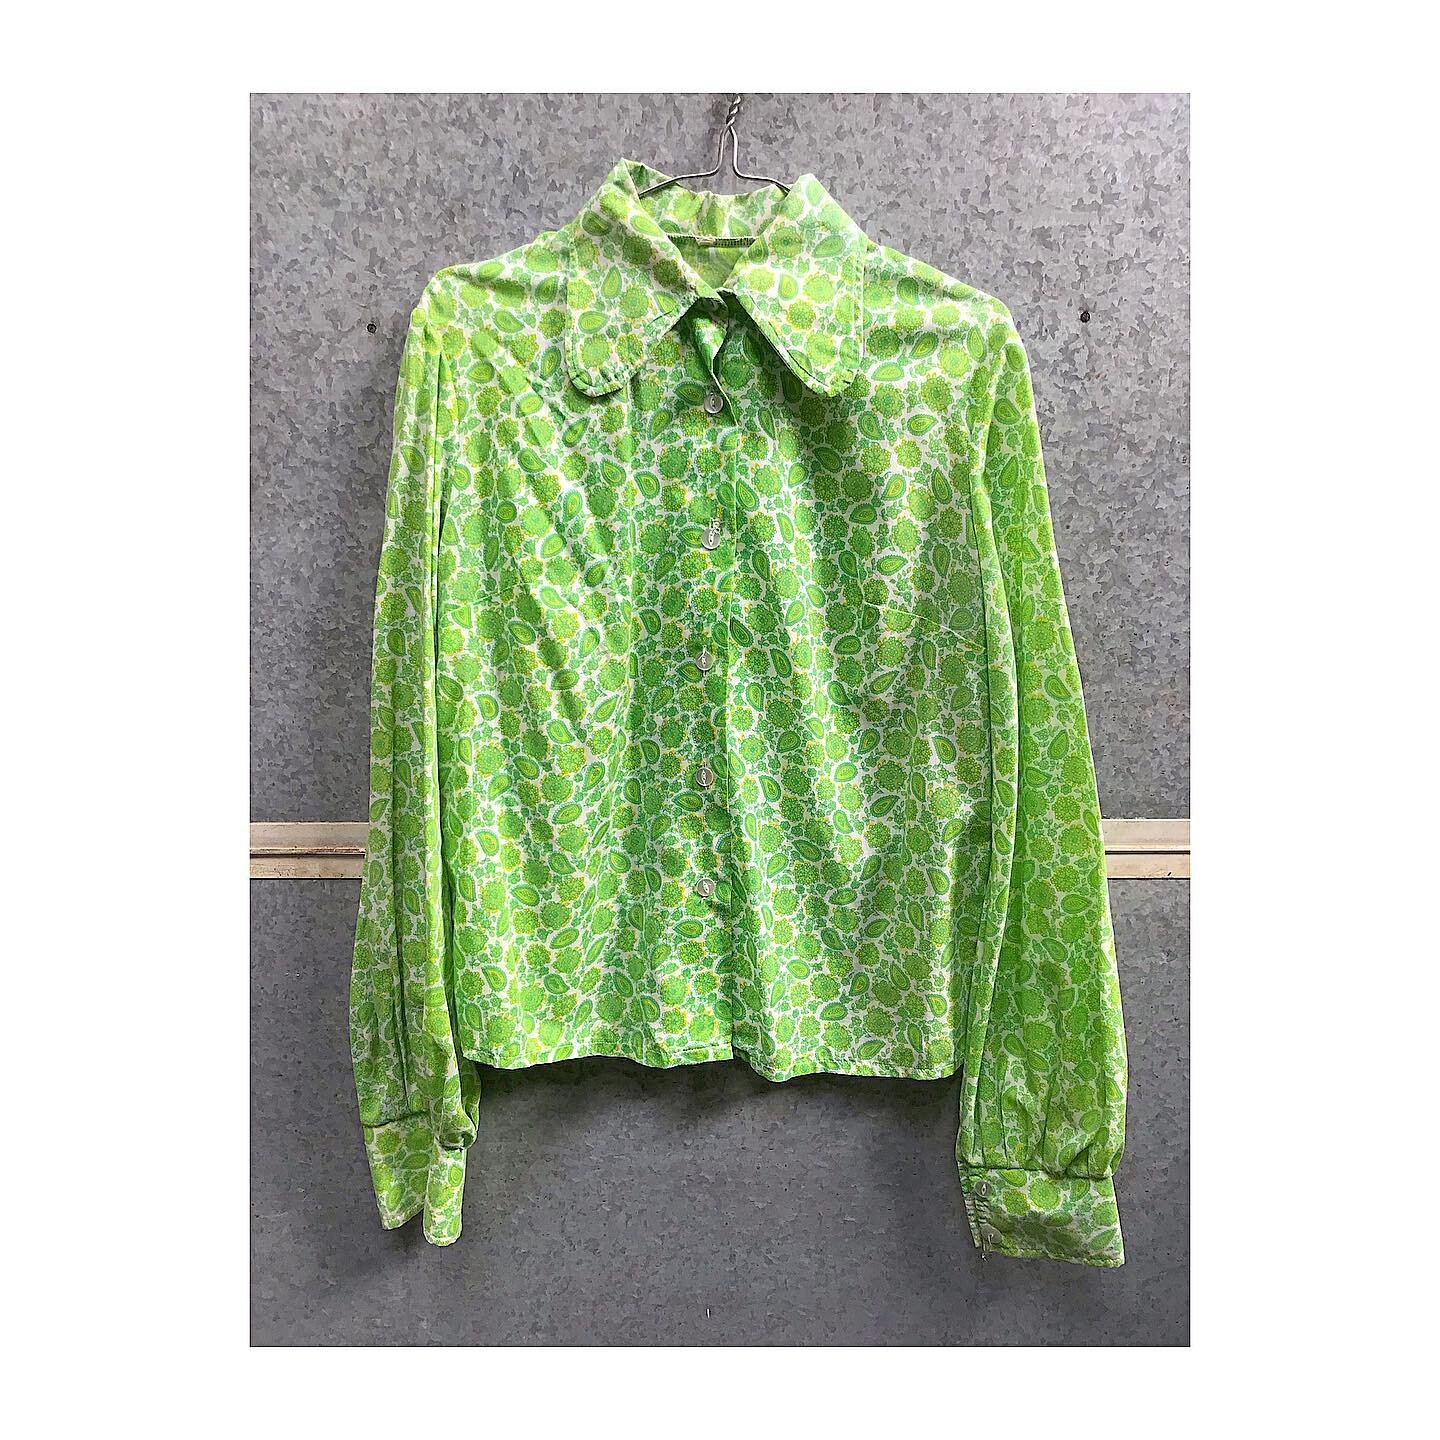 Collar / Paisley / Collarrrrrrr 🔫🔫🔫.
.
.
.
.
.
.
.
.
.
.
.
#70s #70sfashion #70saesthetic #70sstyle #70svibes #70sshirt #70scollar #vintageshirt #greenshirt #patternshirt #paisley #paisleyprint #costume #costumehouse #costumehousefinds #costumehir